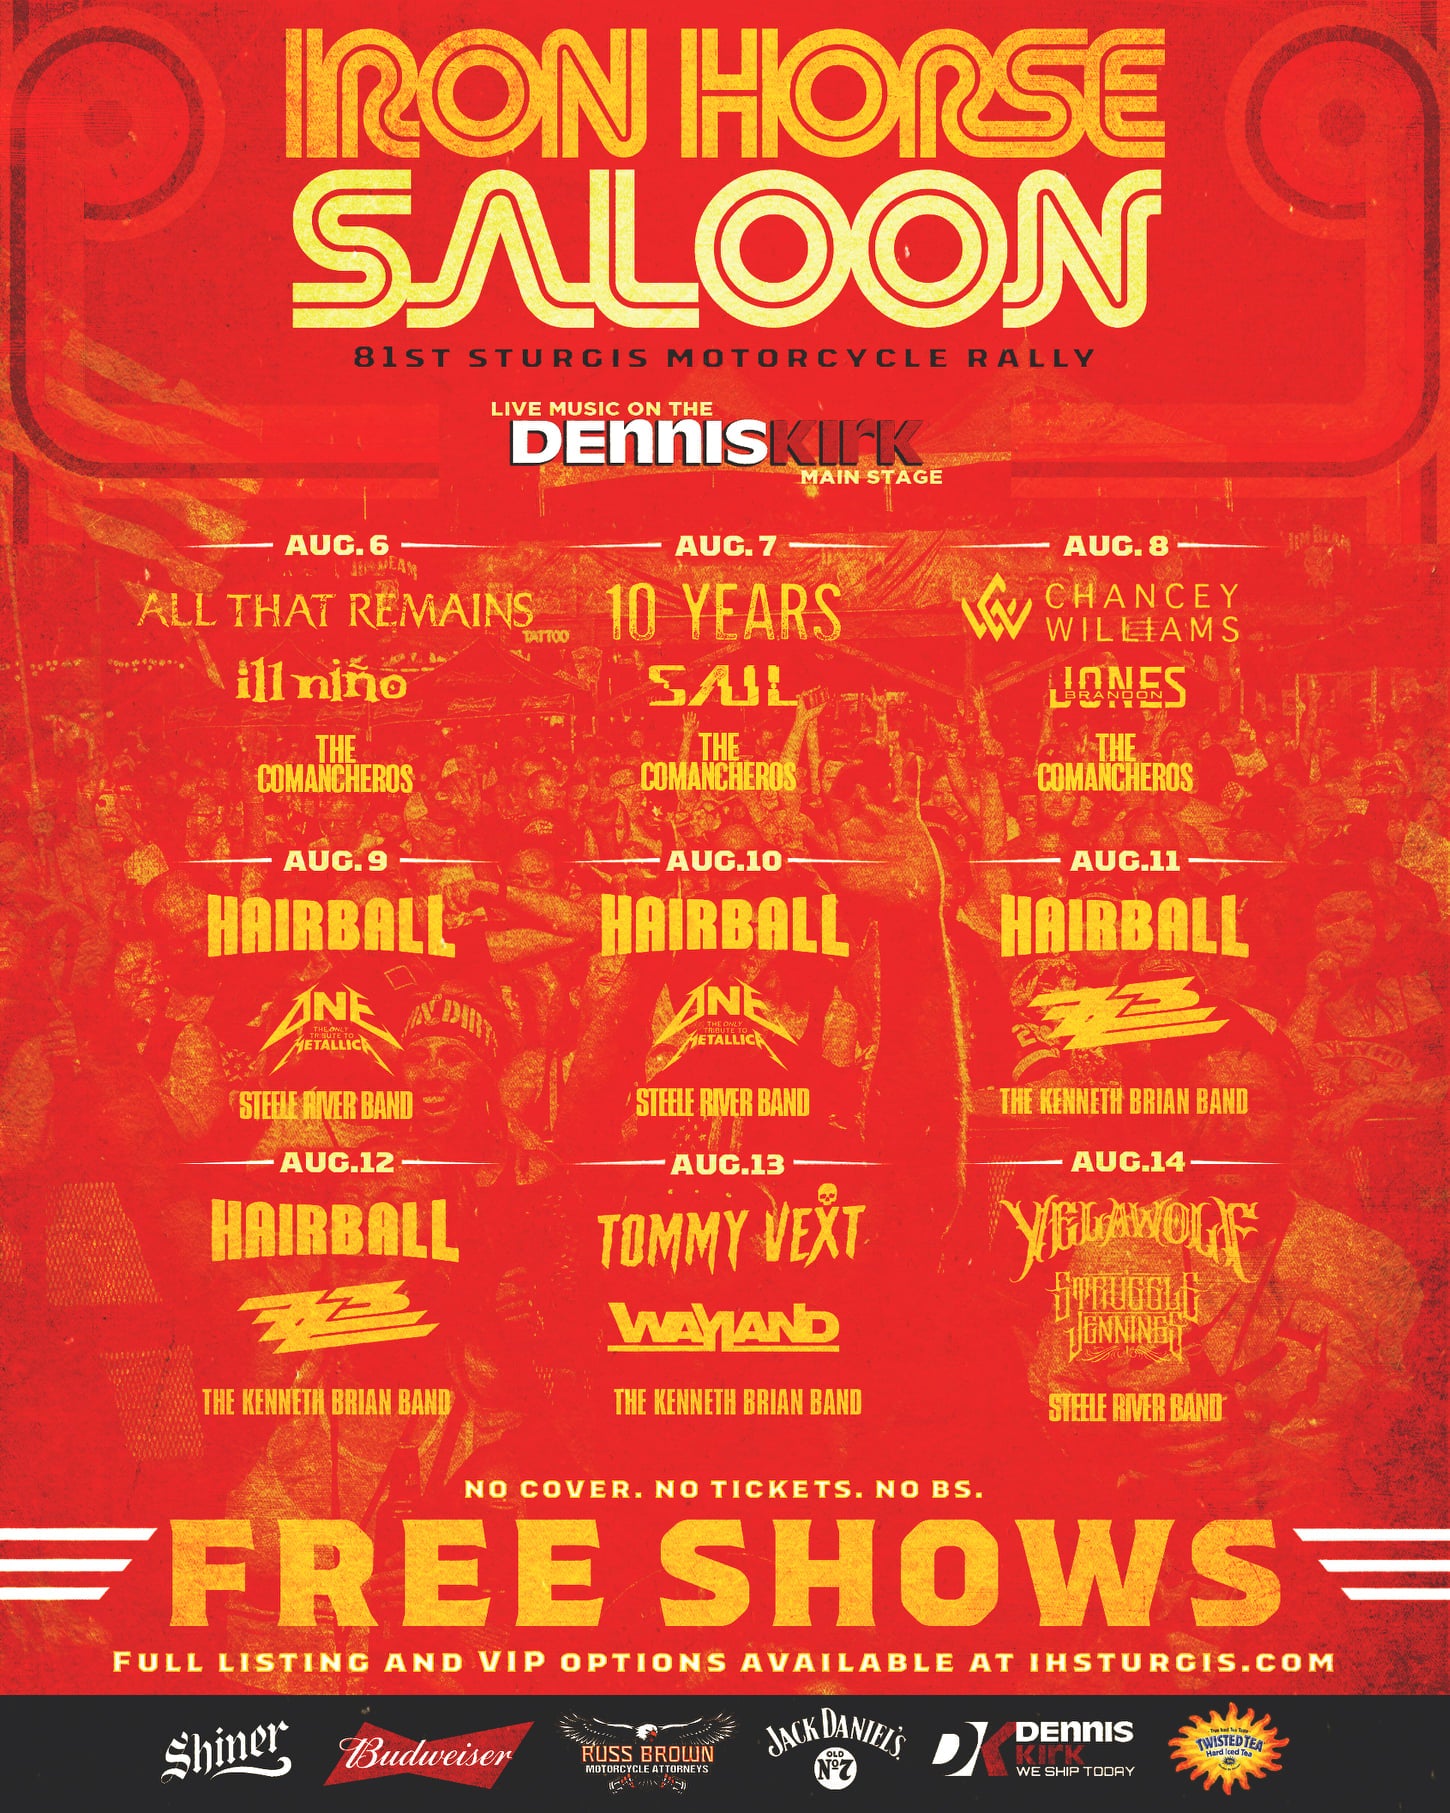 Sturgis Motorcycle Rally Concert Schedule Iron Horse Saloon Sturgis